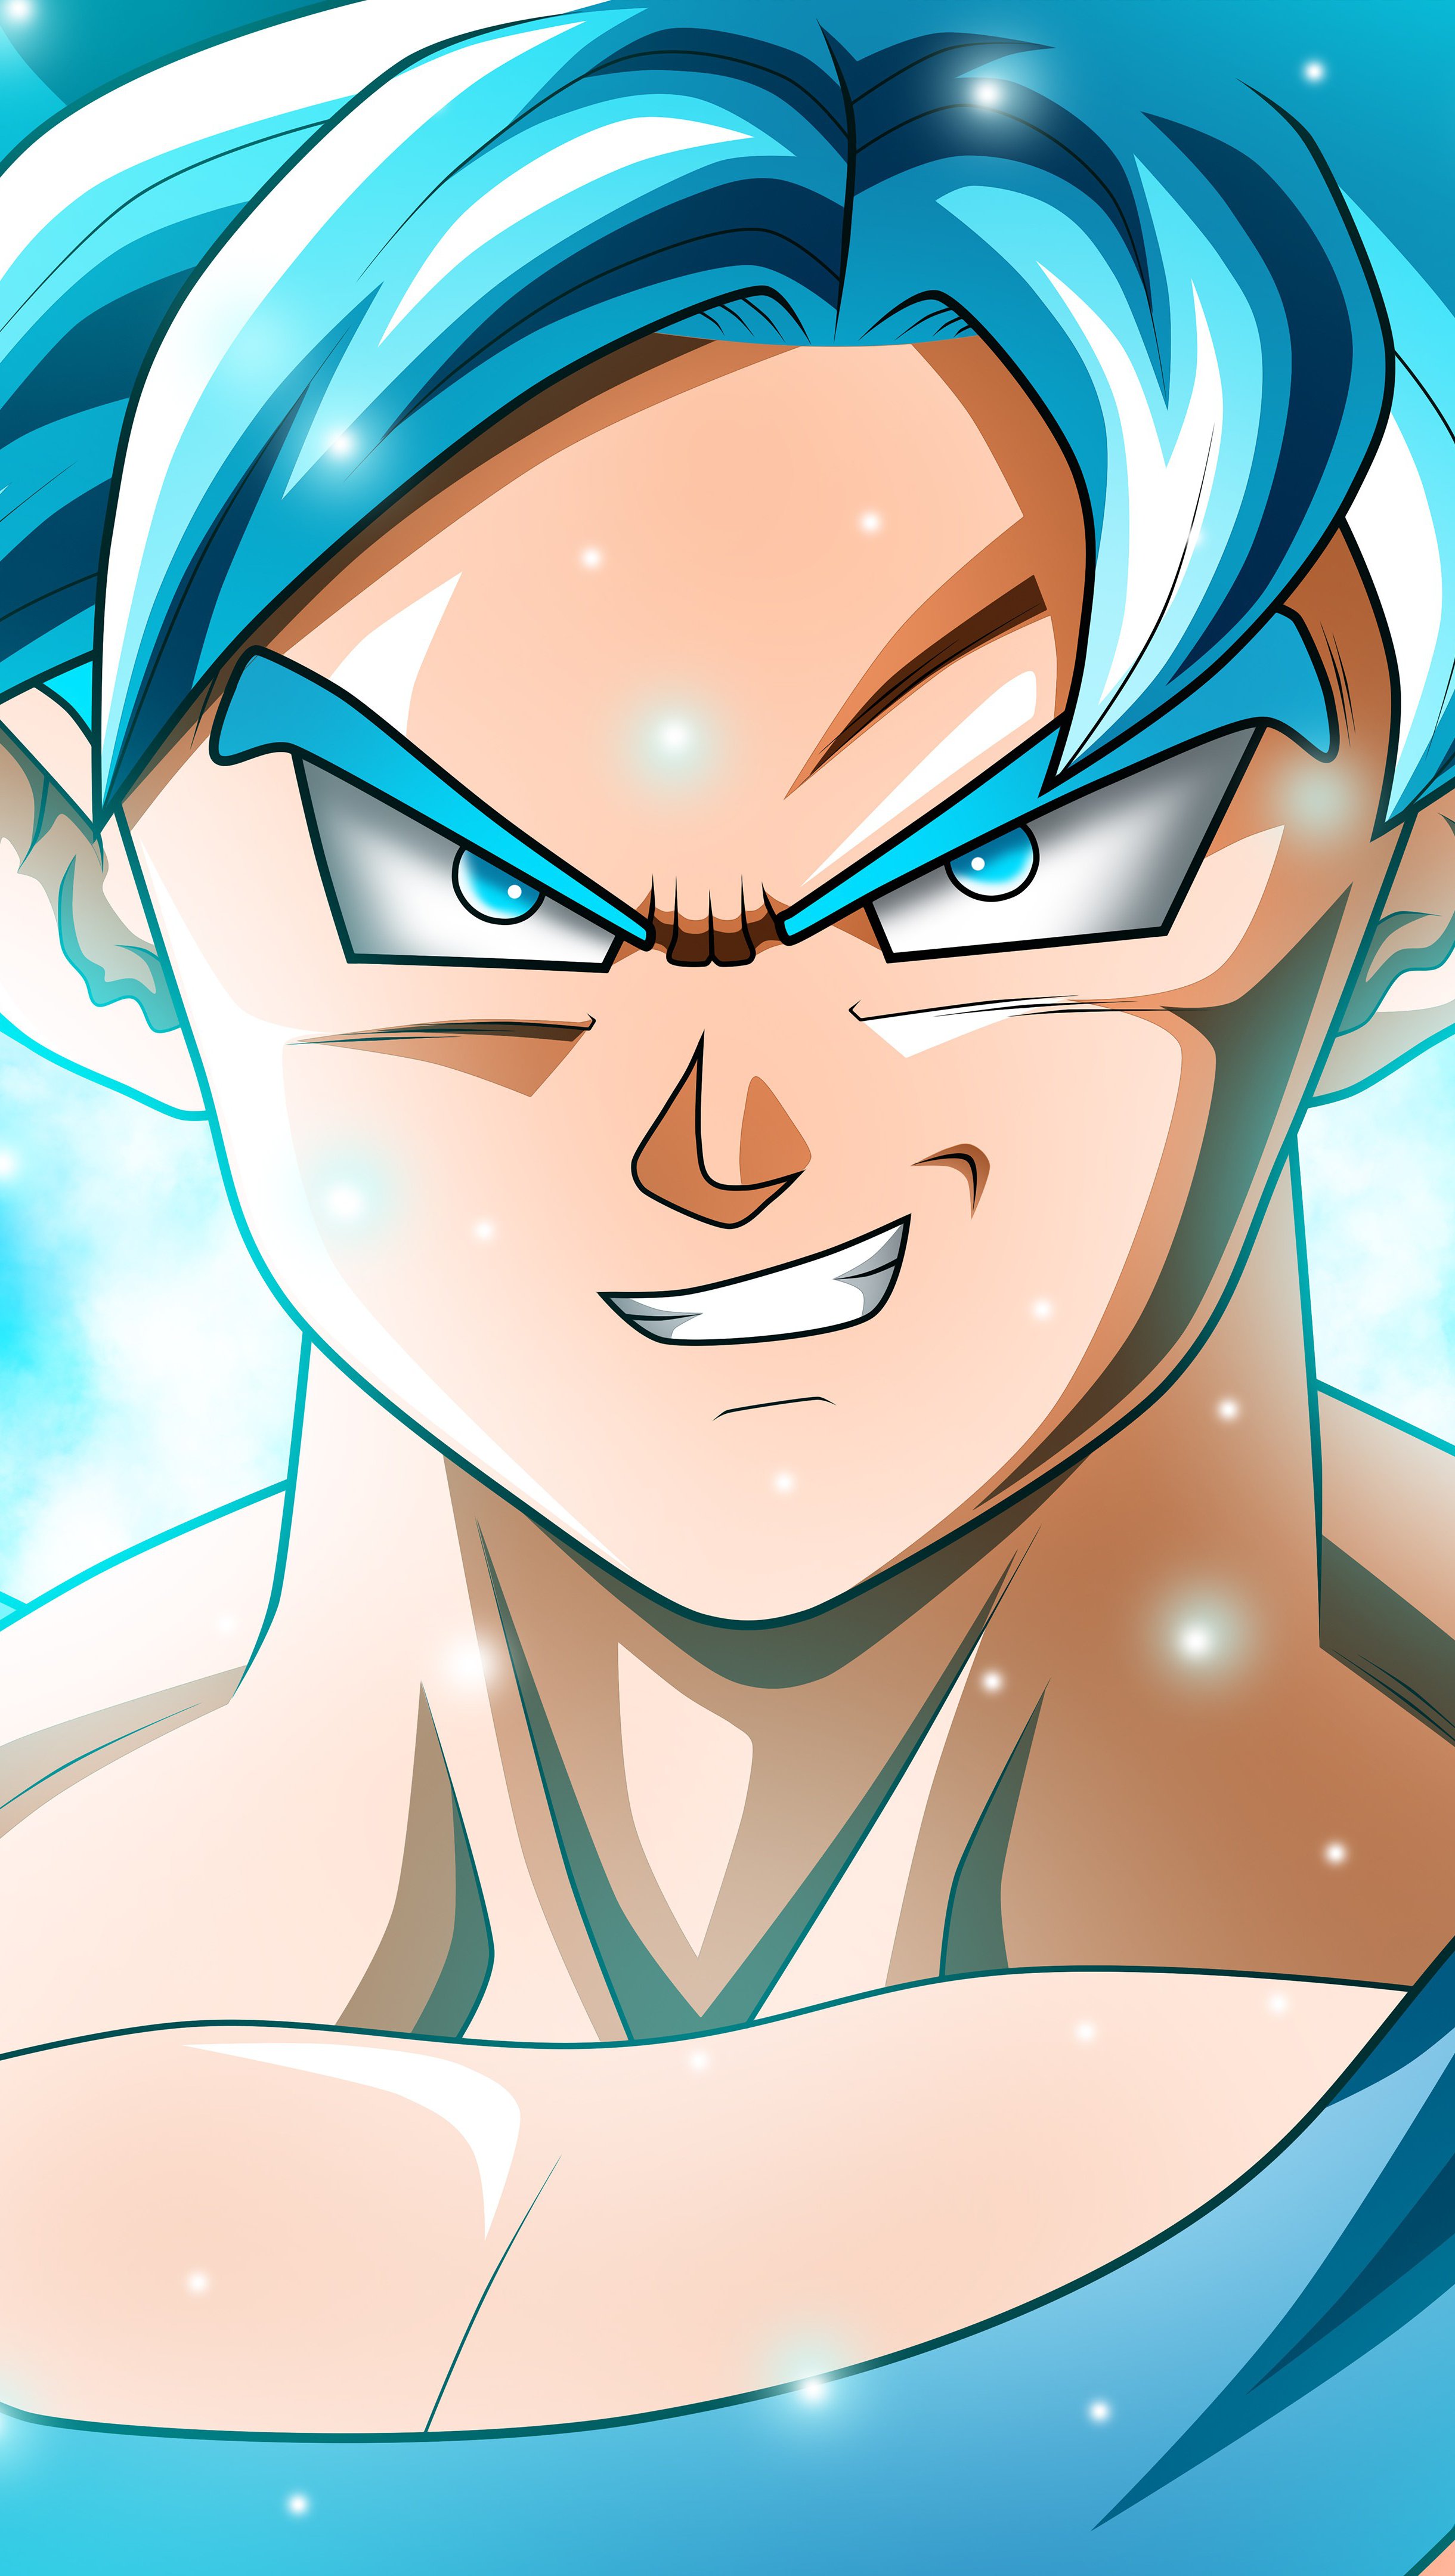 Anime Wallpaper Goku Super Saiyan Blue from Dragon Ball Super Vertical